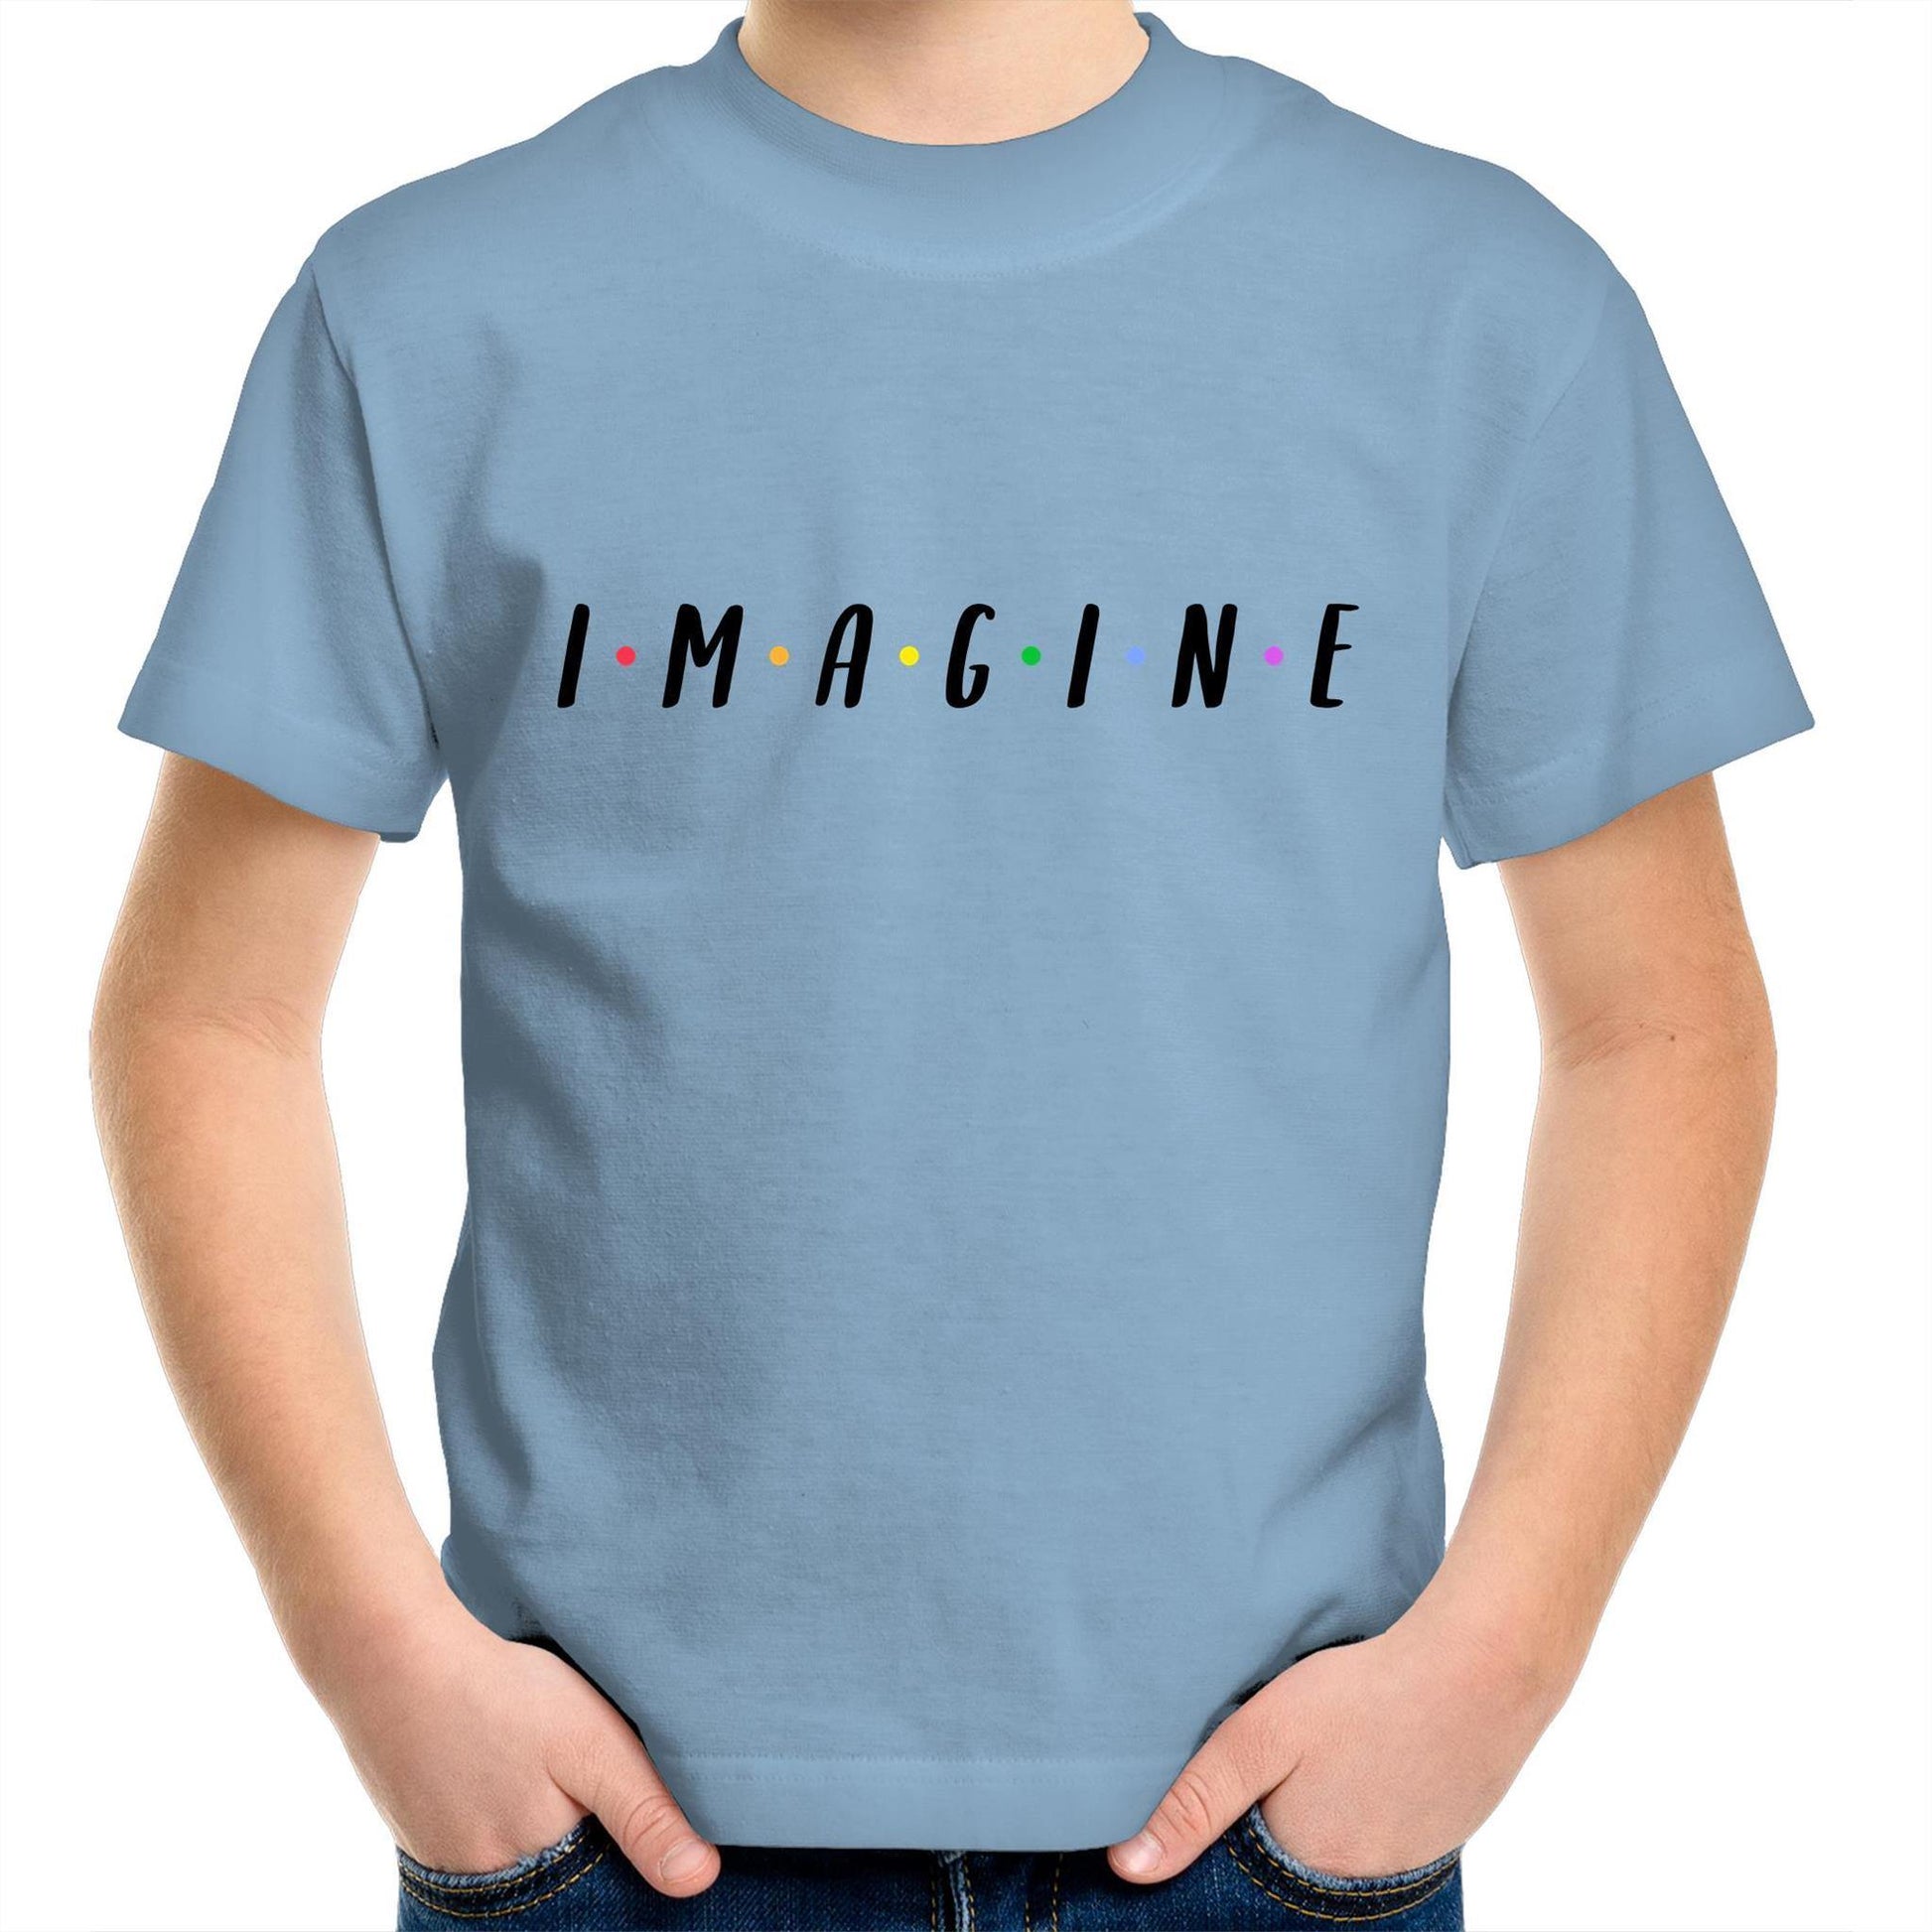 Imagine - Kids Youth Crew T-Shirt Carolina Blue Kids Youth T-shirt